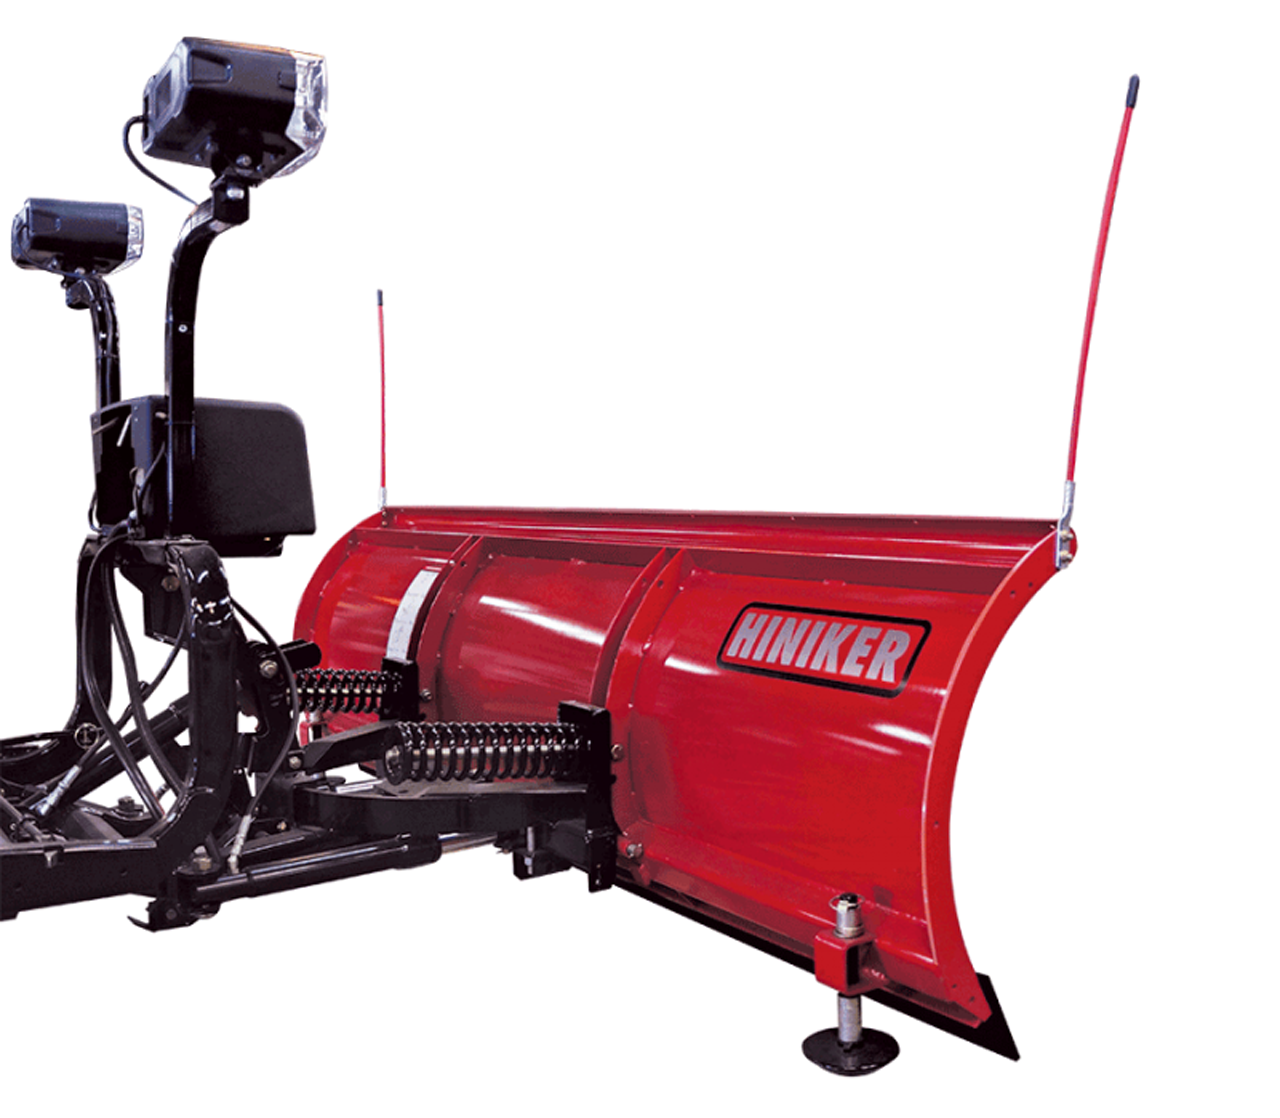 new-hiniker-model-2853-snow-plow-mounts-controls-manuals-truck-mounting-system-new-cost-1000000-cdn-big-7